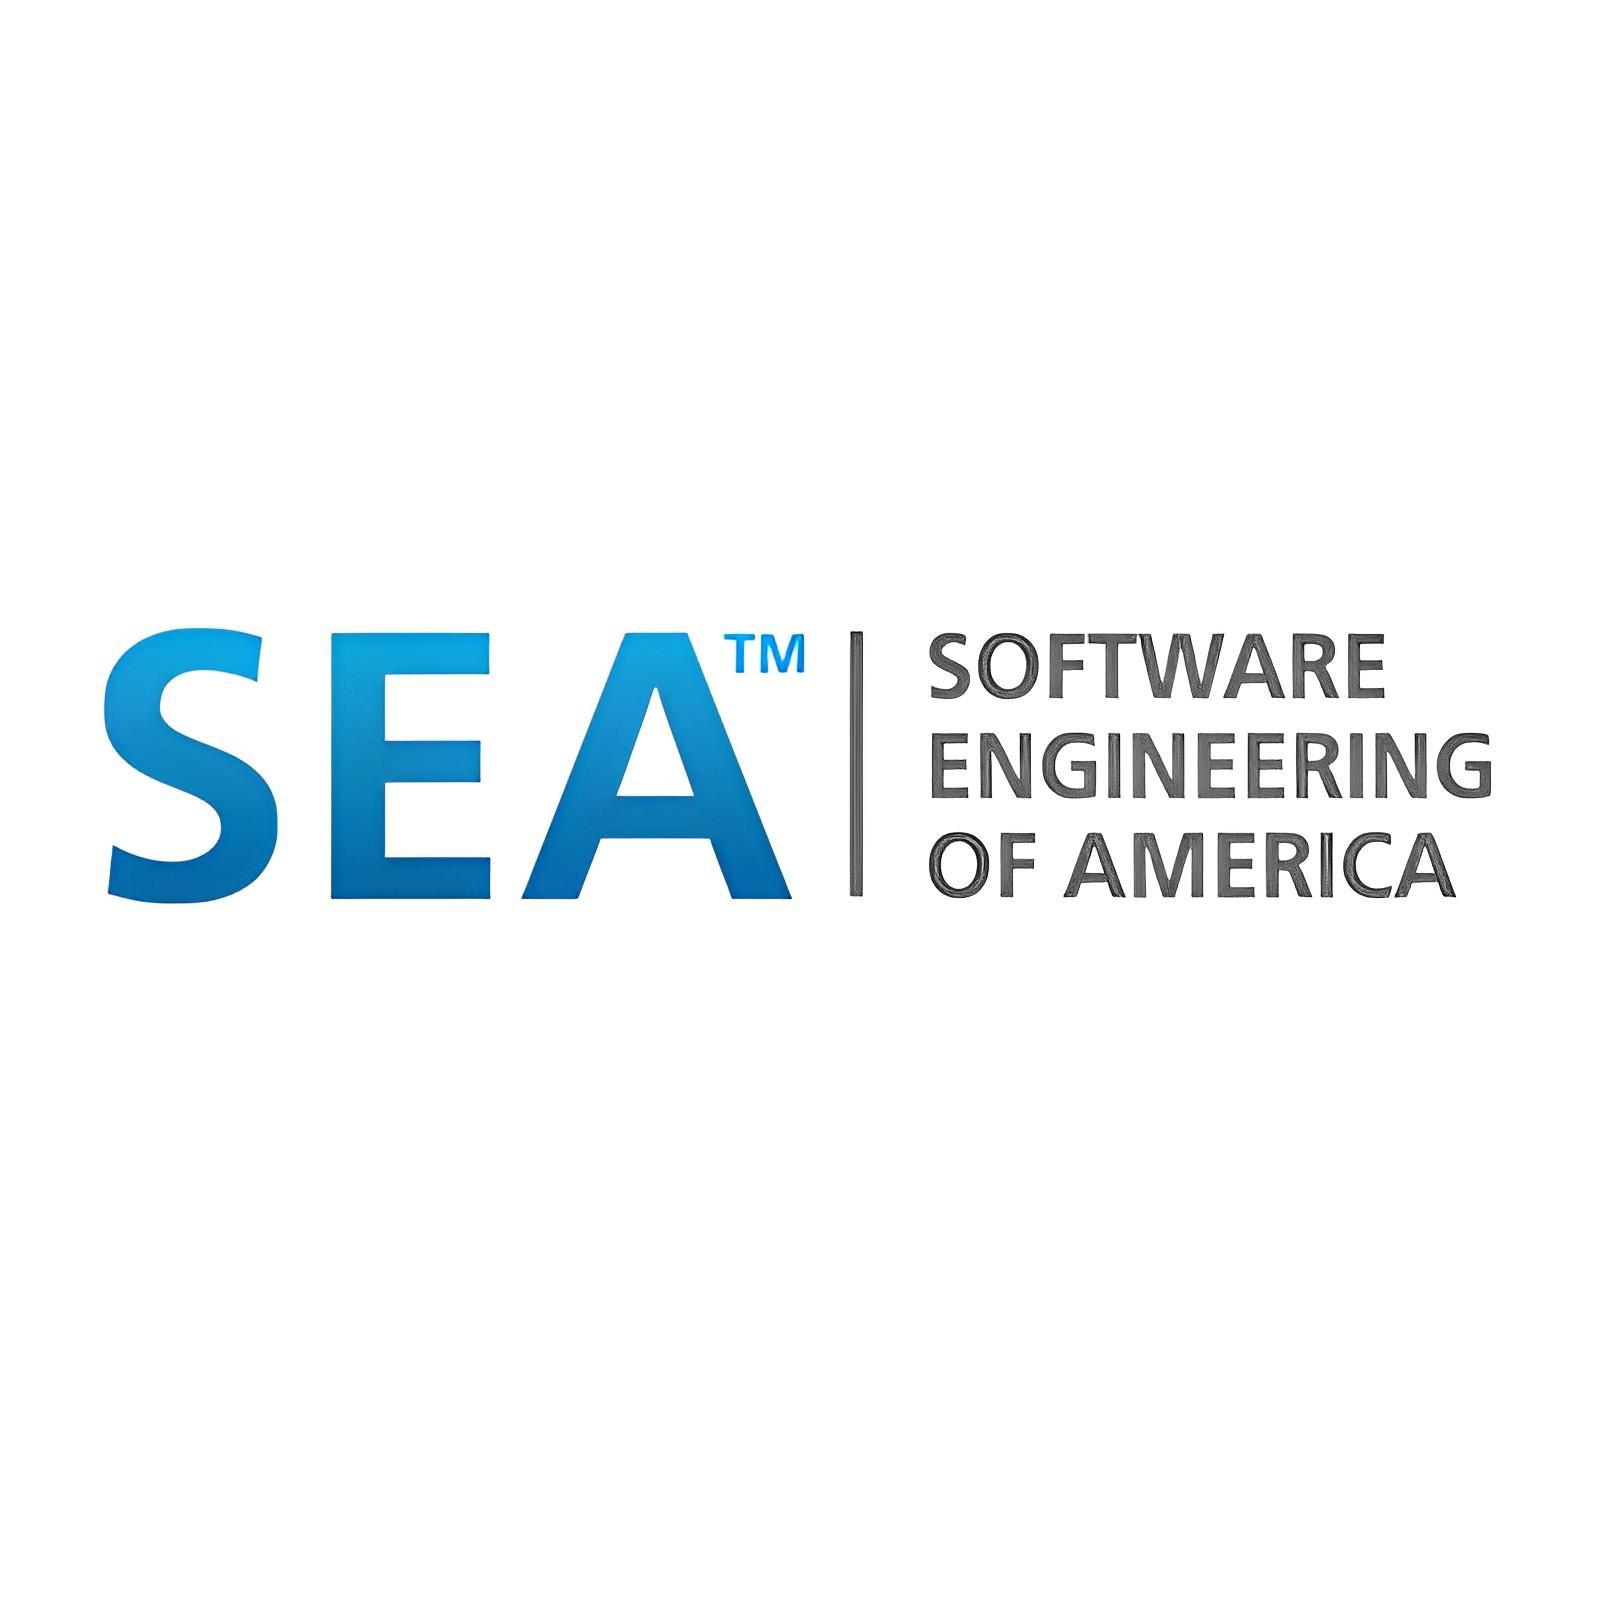 Seasoft Software